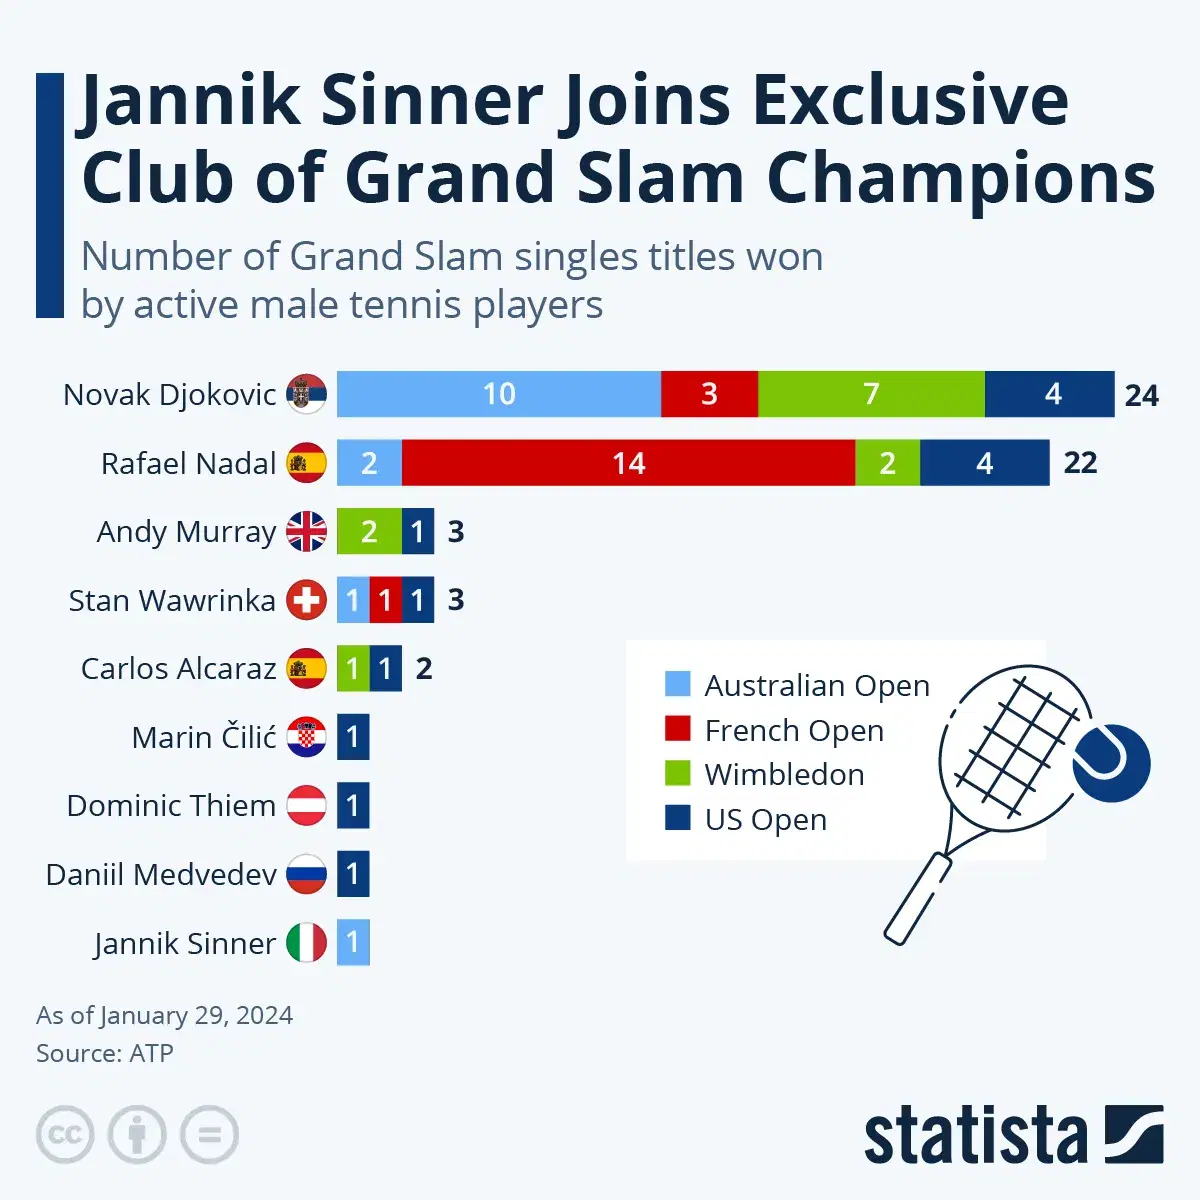 Jannik Sinner Joins Exclusive Club of Grand Slam Champions